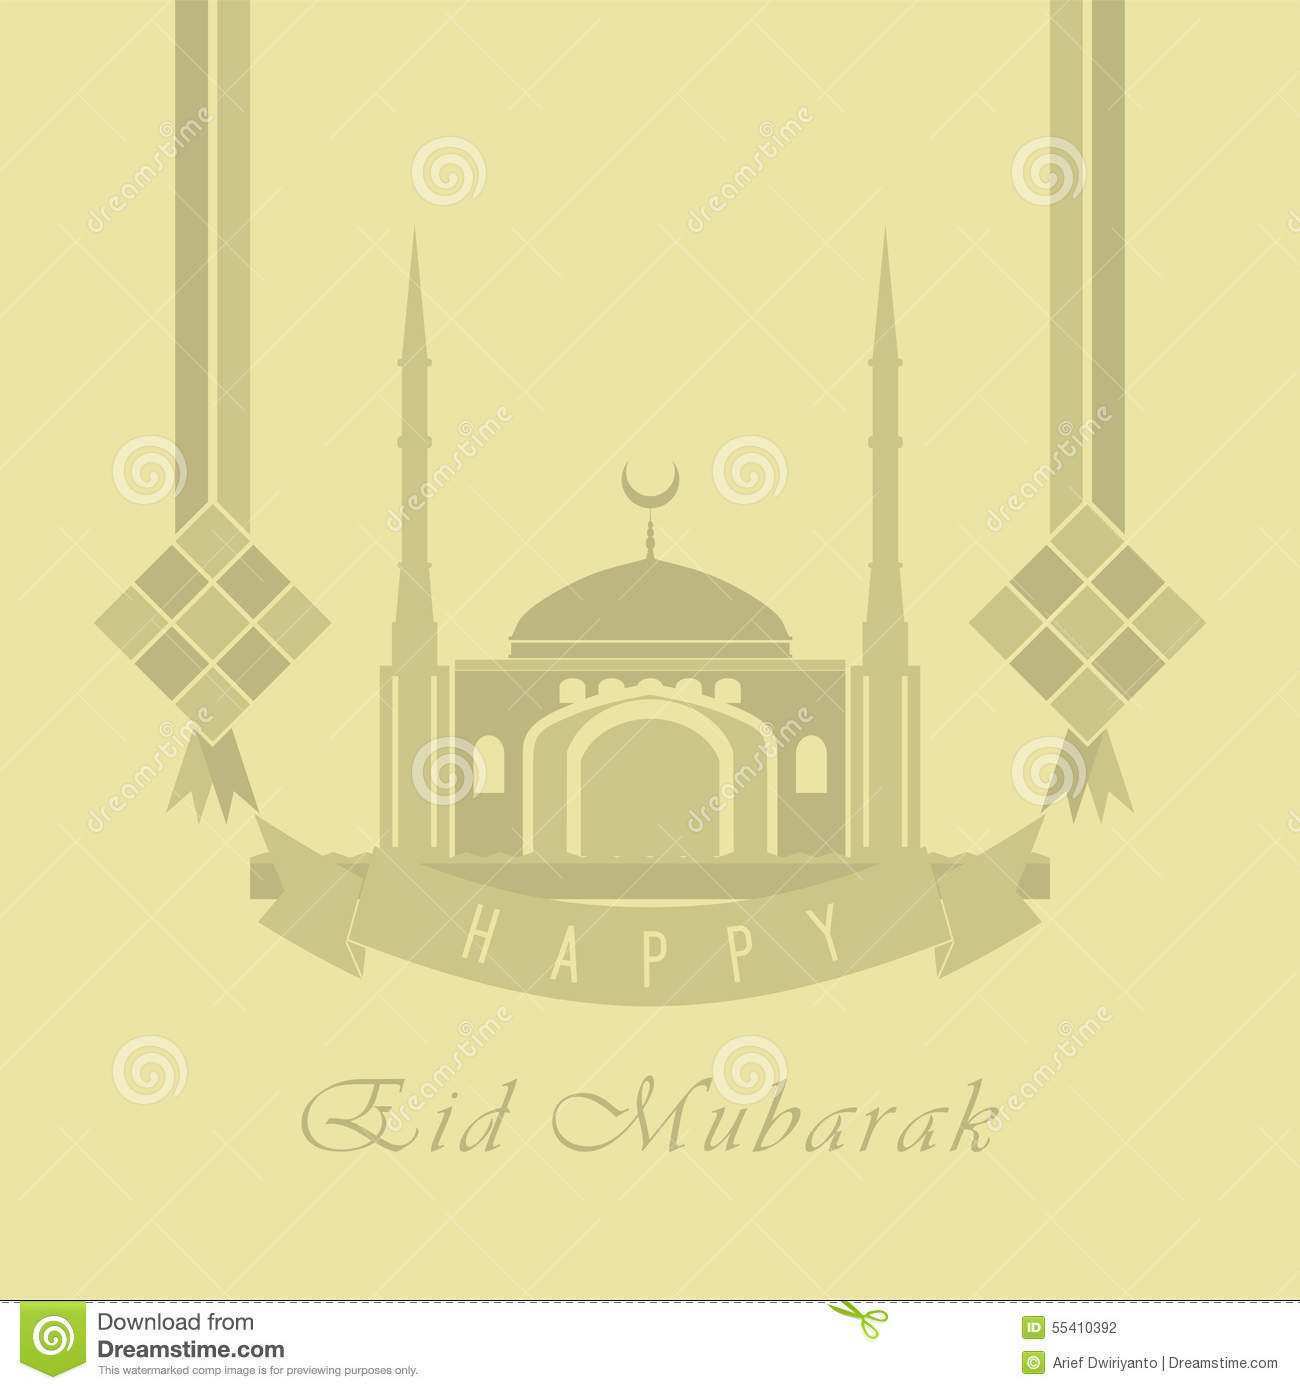 95 Customize Our Free Eid Mubarak Card Templates in Photoshop with Eid Mubarak Card Templates